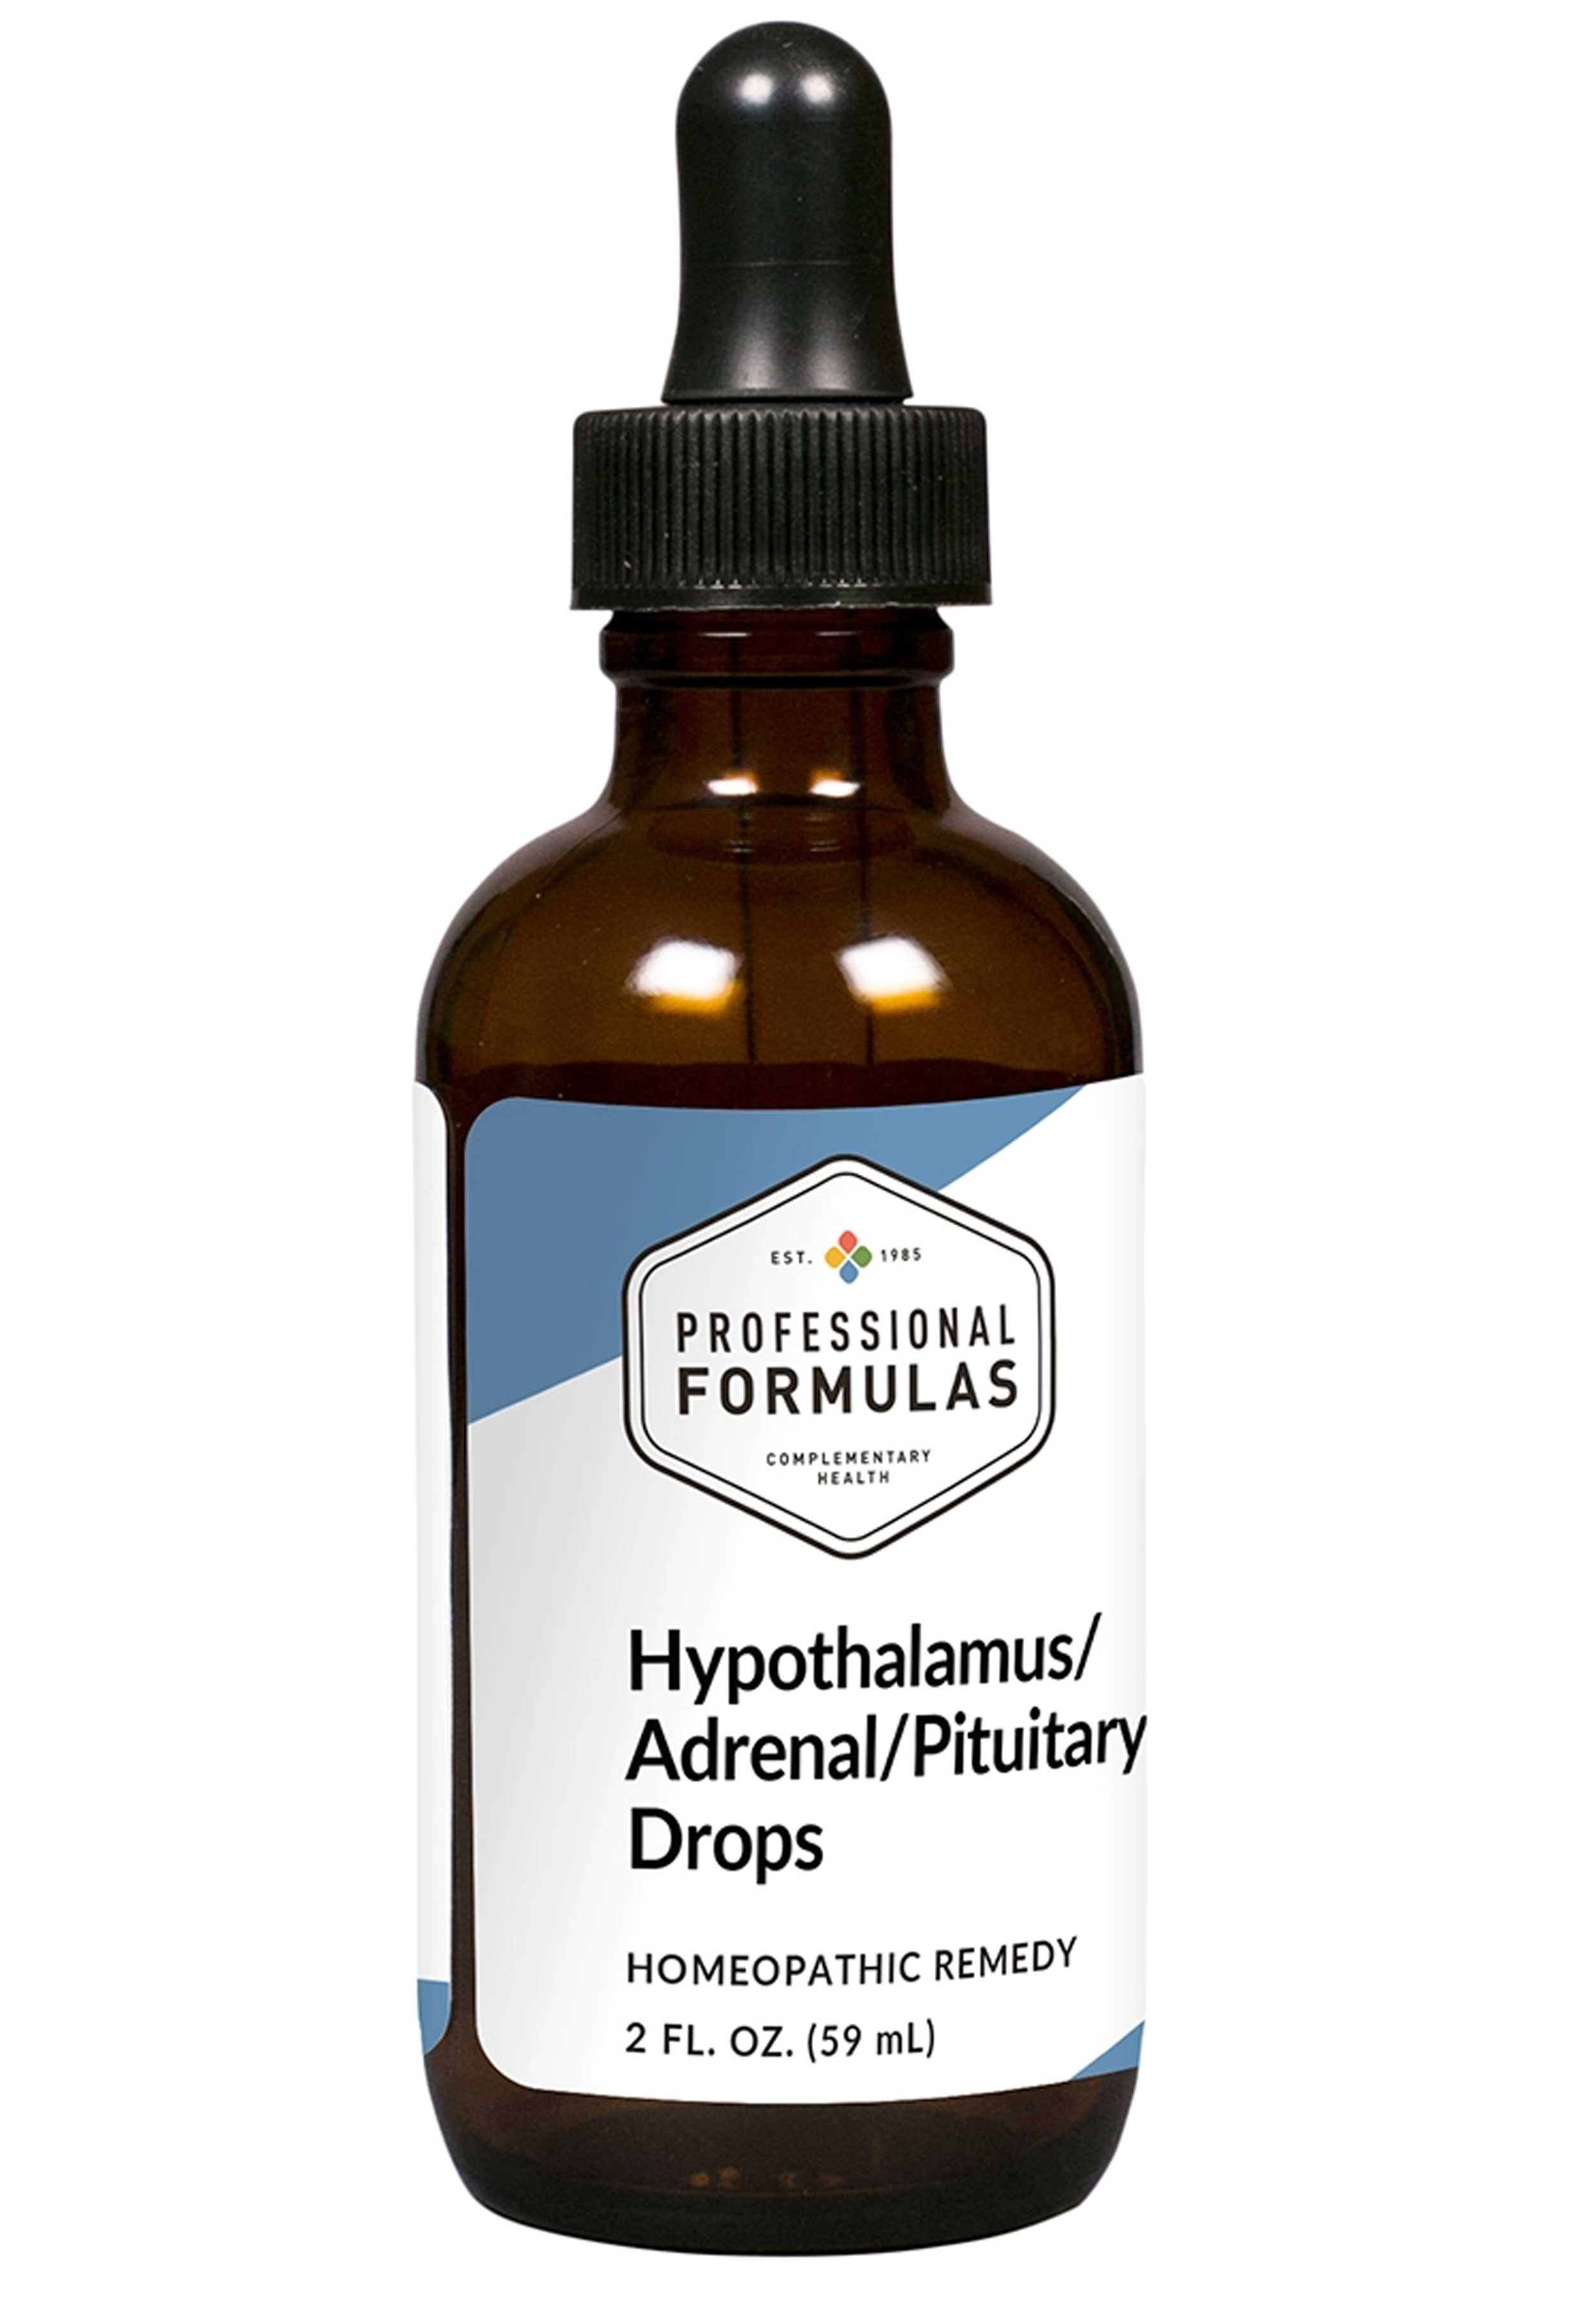 Professional Formulas Hypothalamus/Adrenal/Pituitary Drops